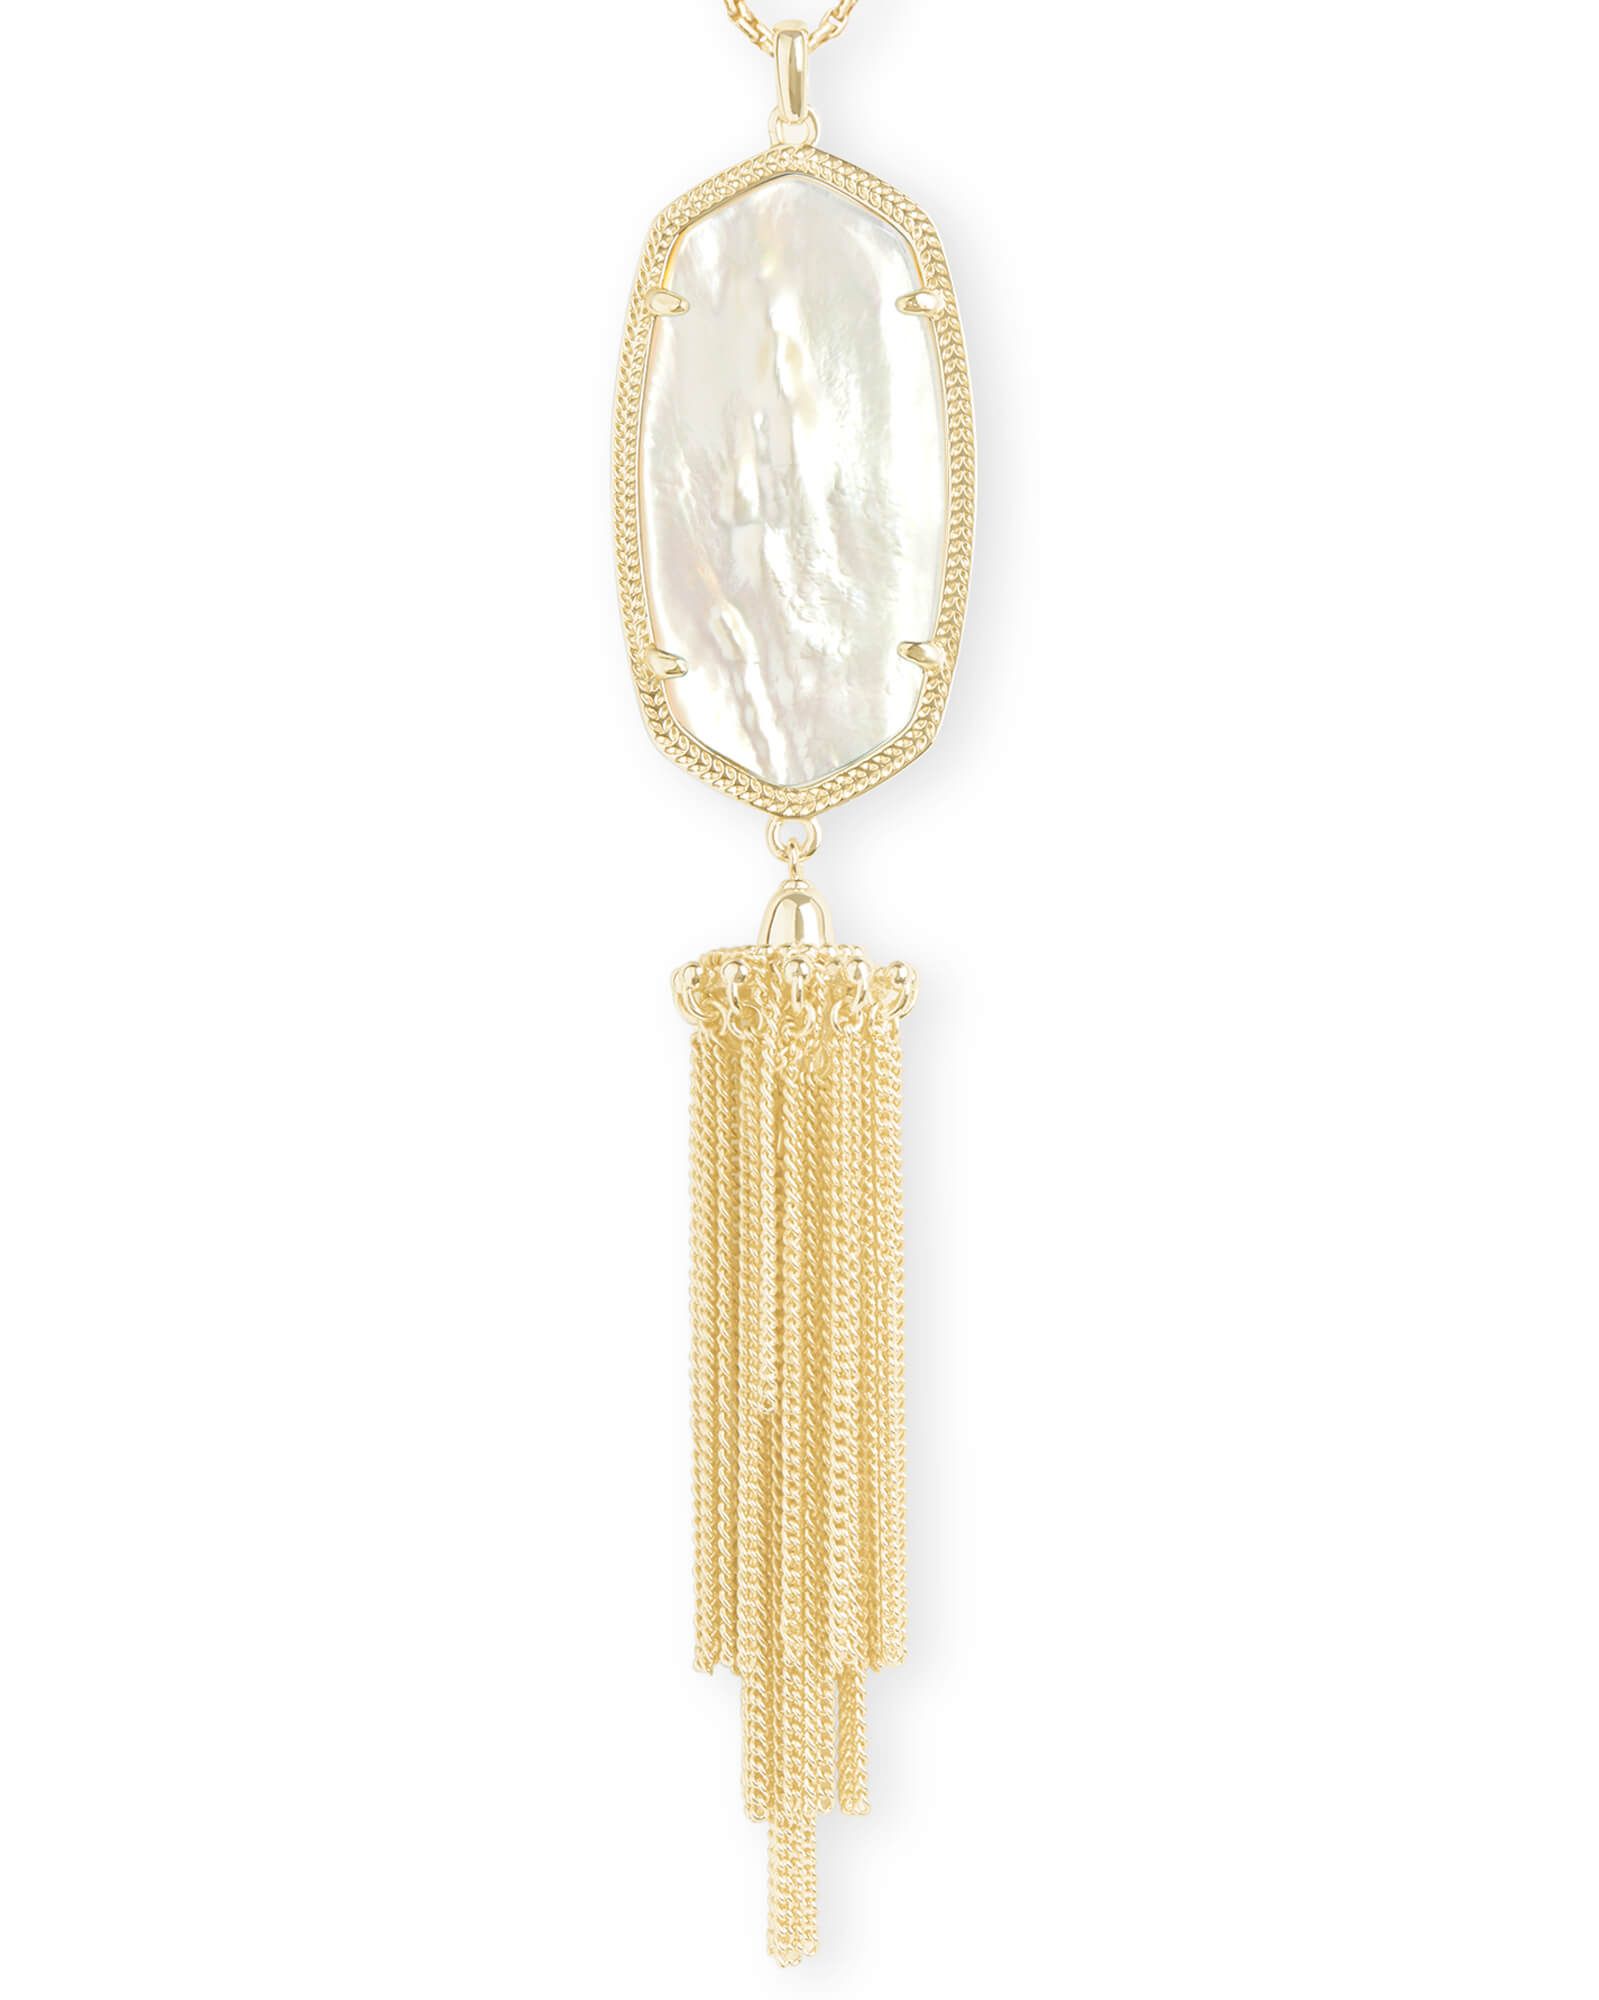 Rayne Gold Long Necklace in Ivory Pearl | Kendra Scott | Kendra Scott